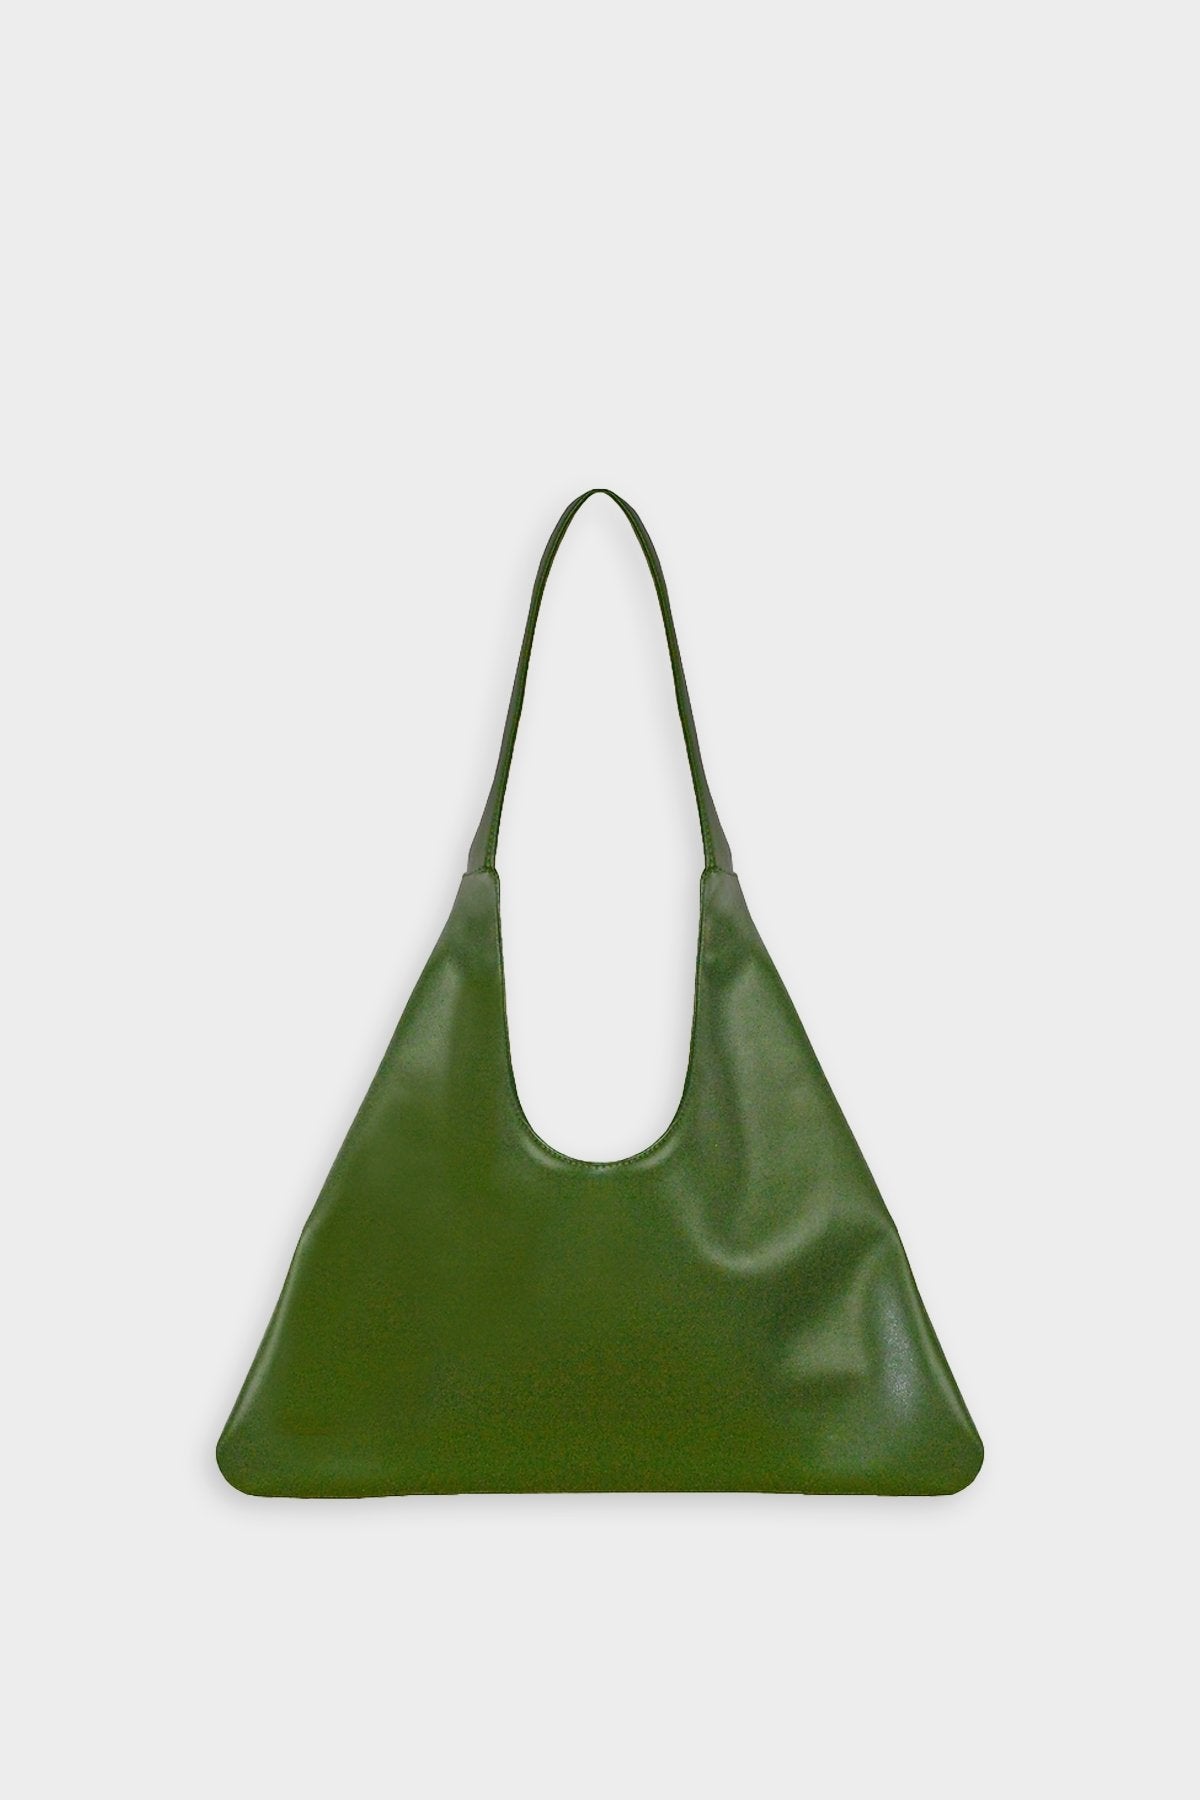 Agave Triangular Tote Bag in Green - shop-olivia.com